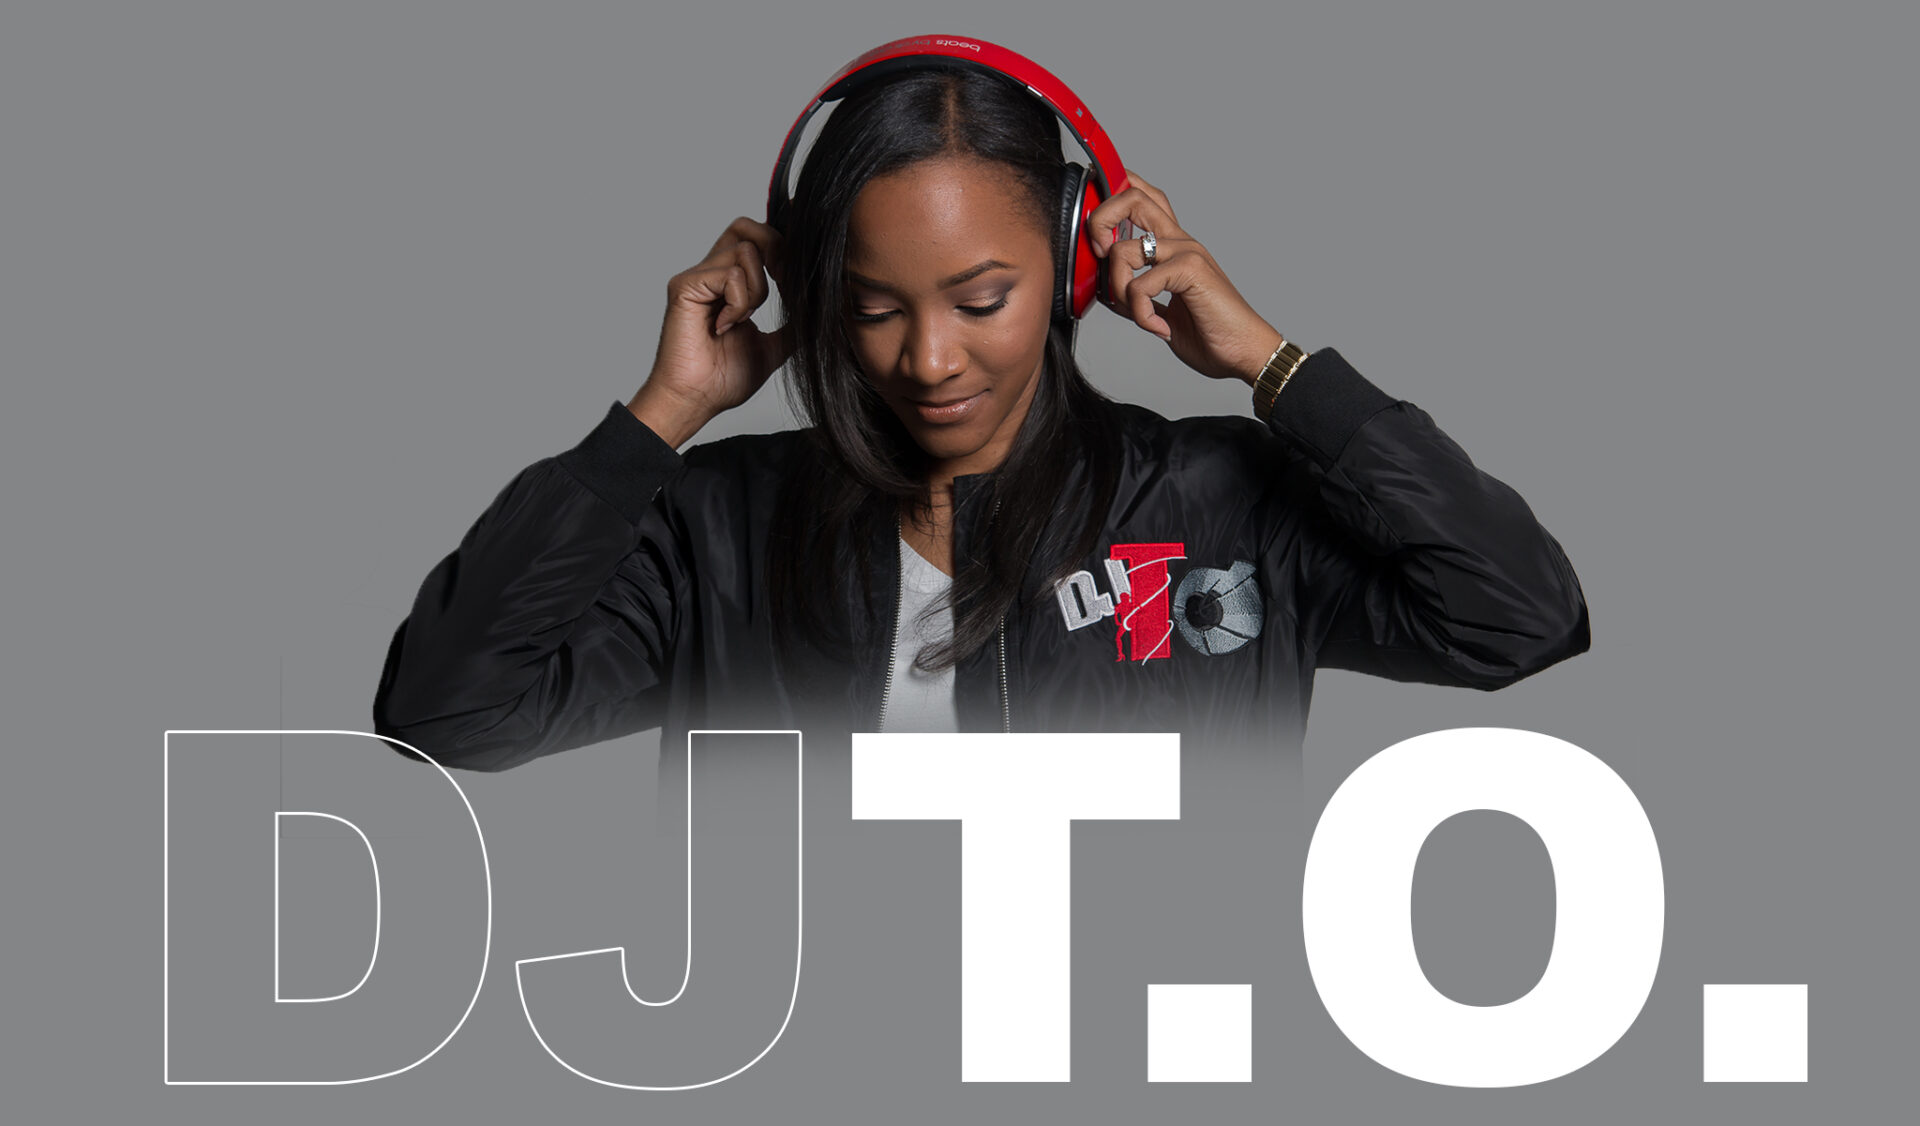 Get to know DJ T.O.